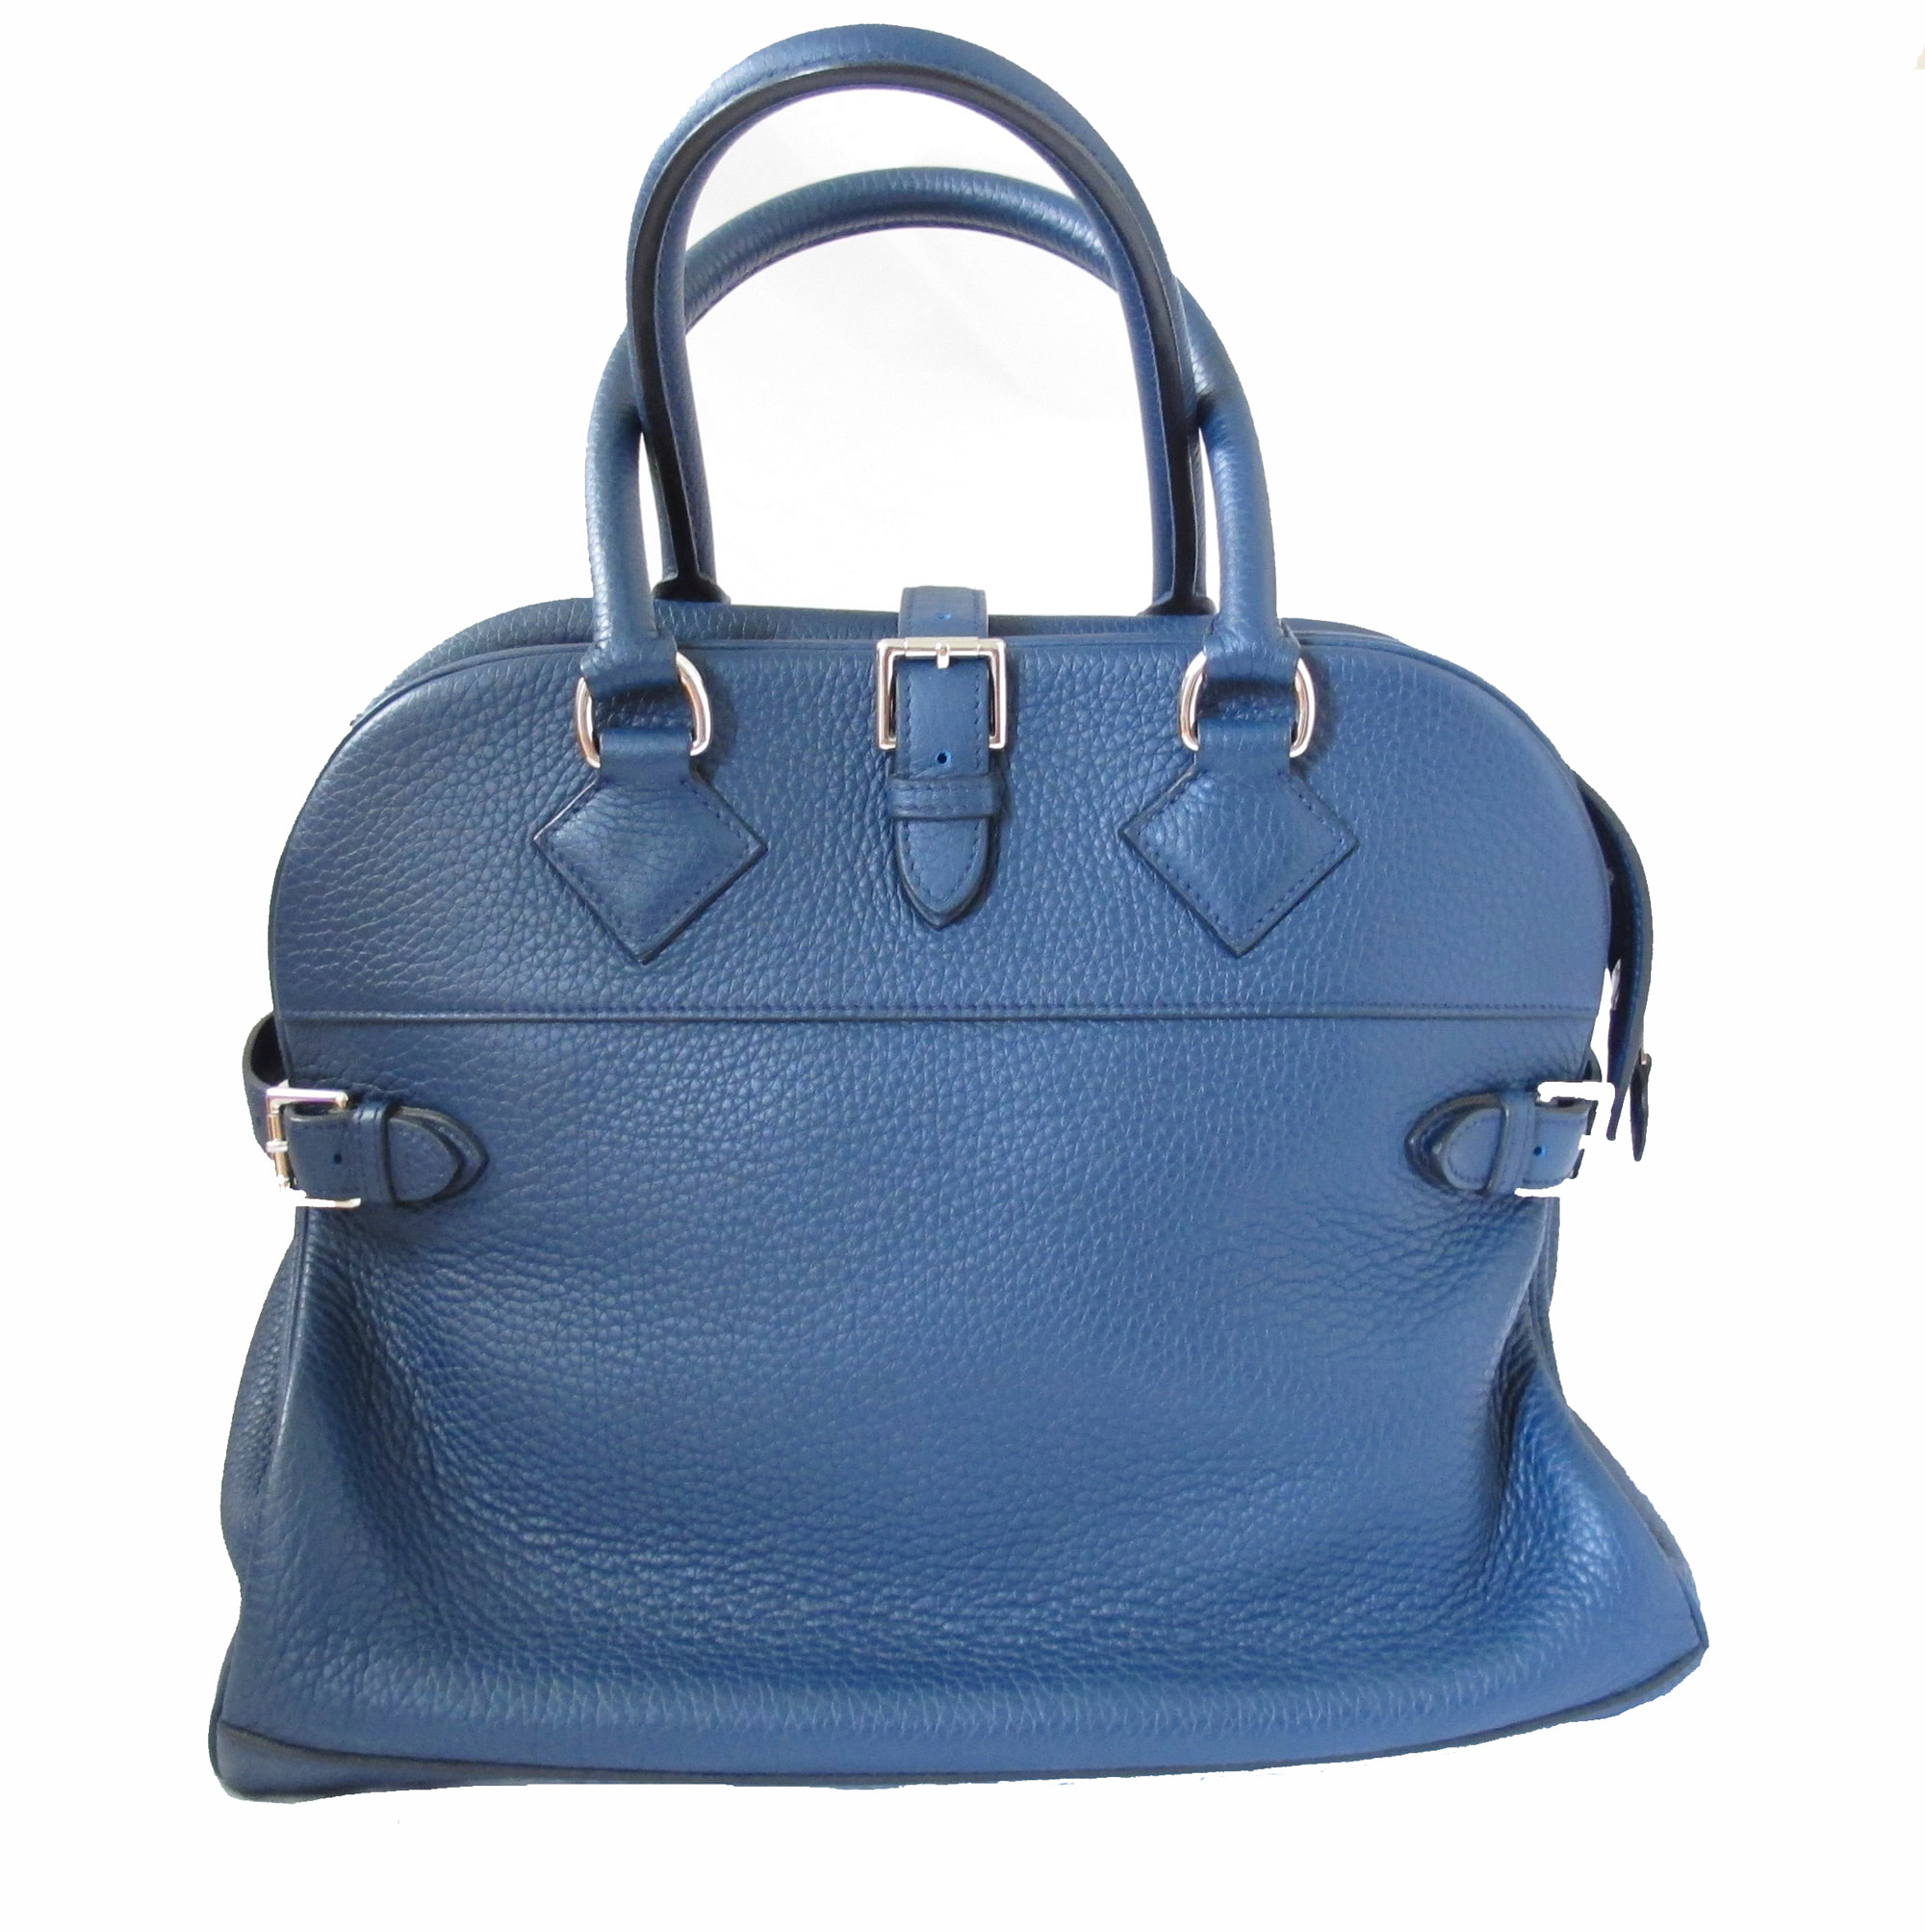 Hermes Atlas Bag Blue de Malte | loveallbags.com